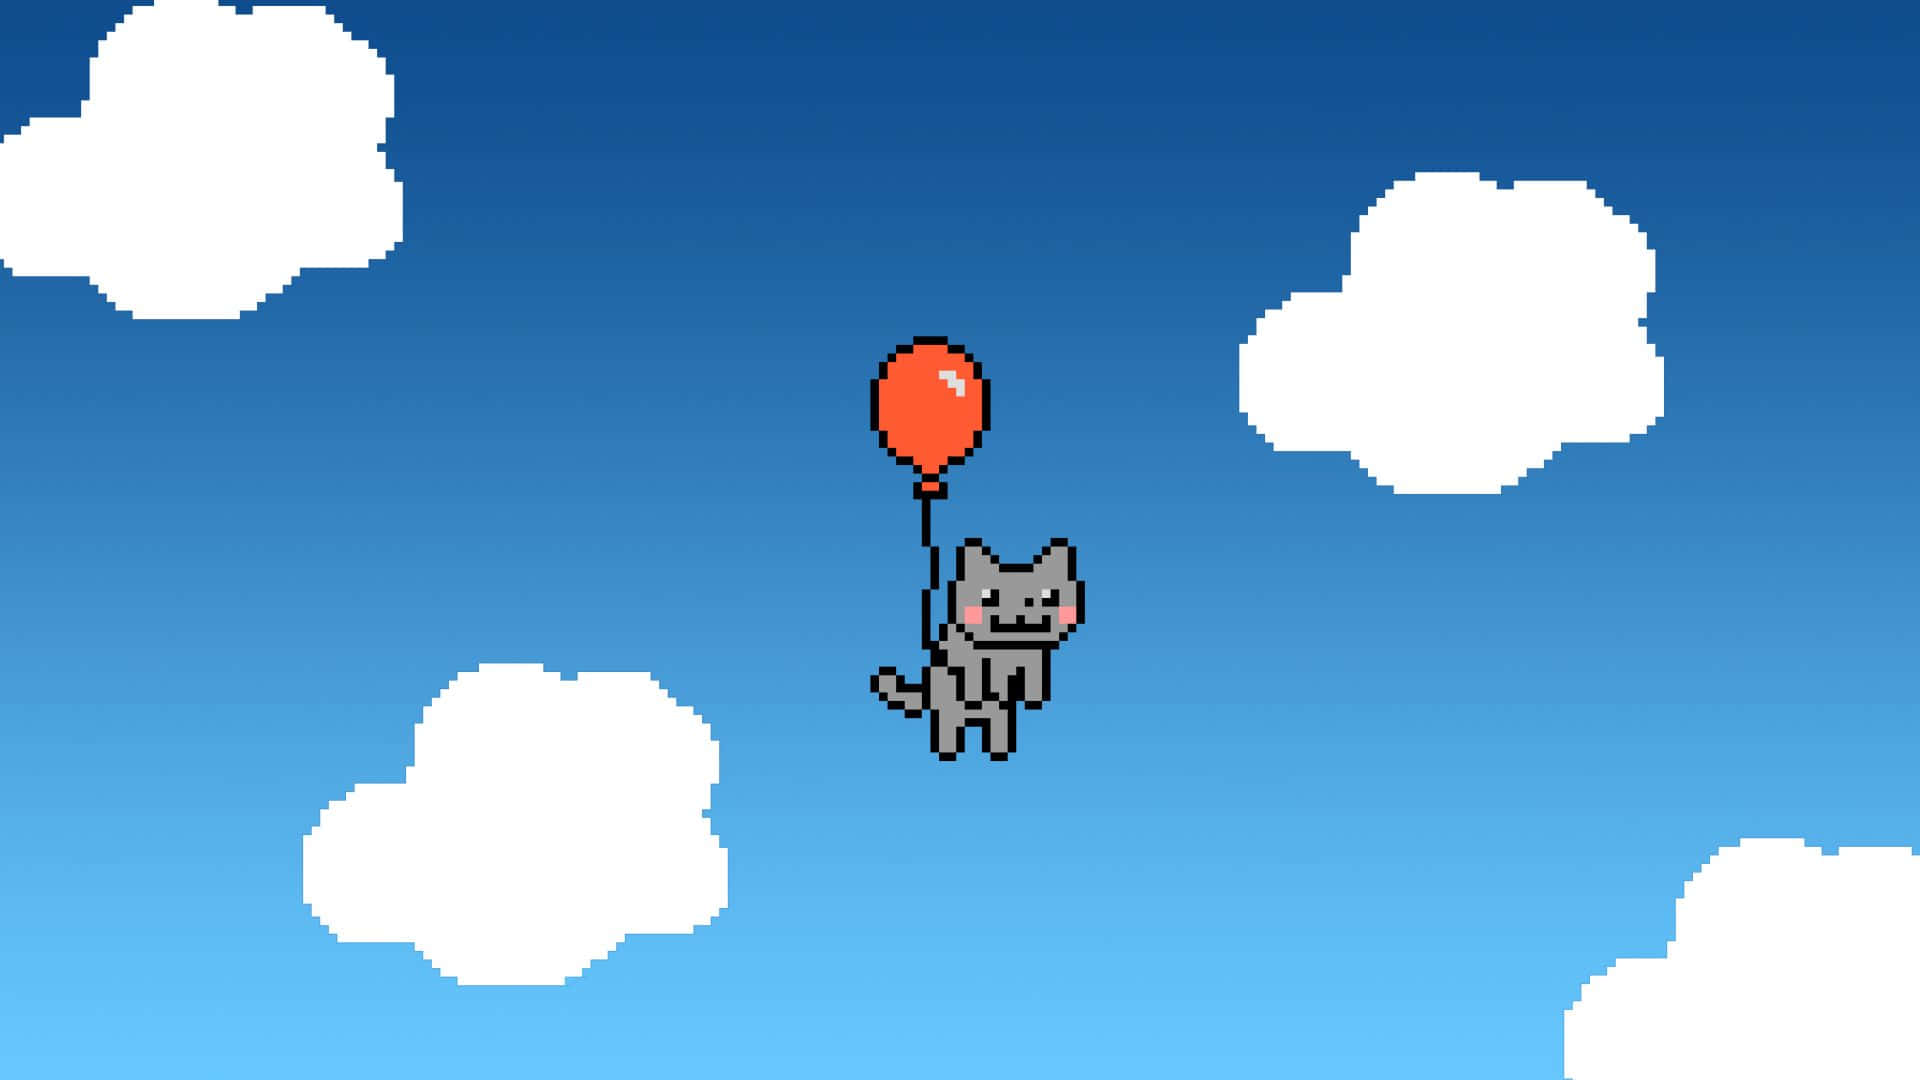 Nyan Cat soaring across a pixelated sky